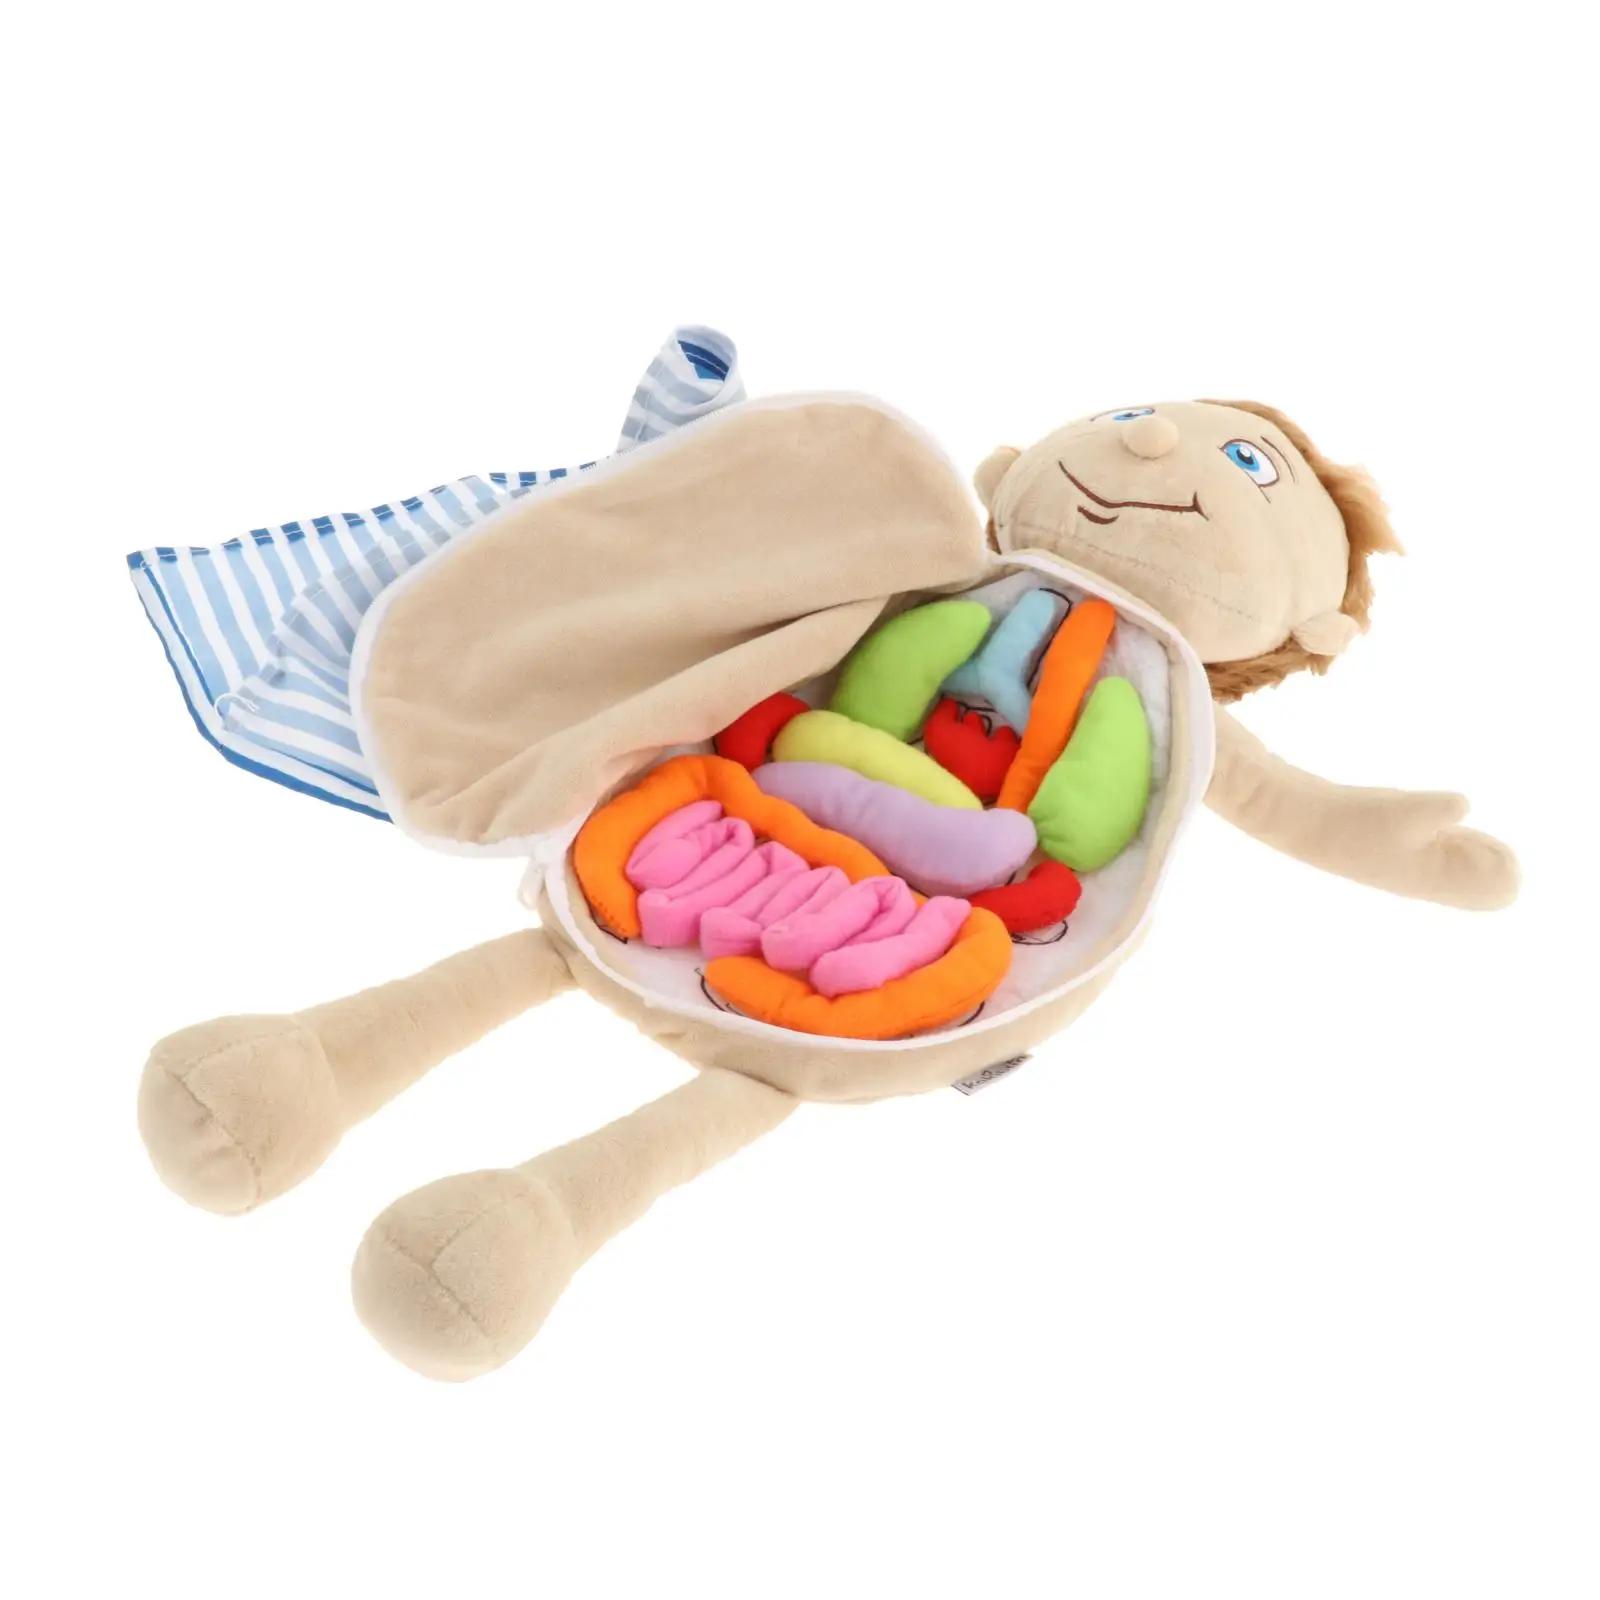 3D Organ Doll, Anatomy Doll Human Body Organs Awareness Educational Tool Toy Play Doctor Set for Home Preschool Teaching Aid